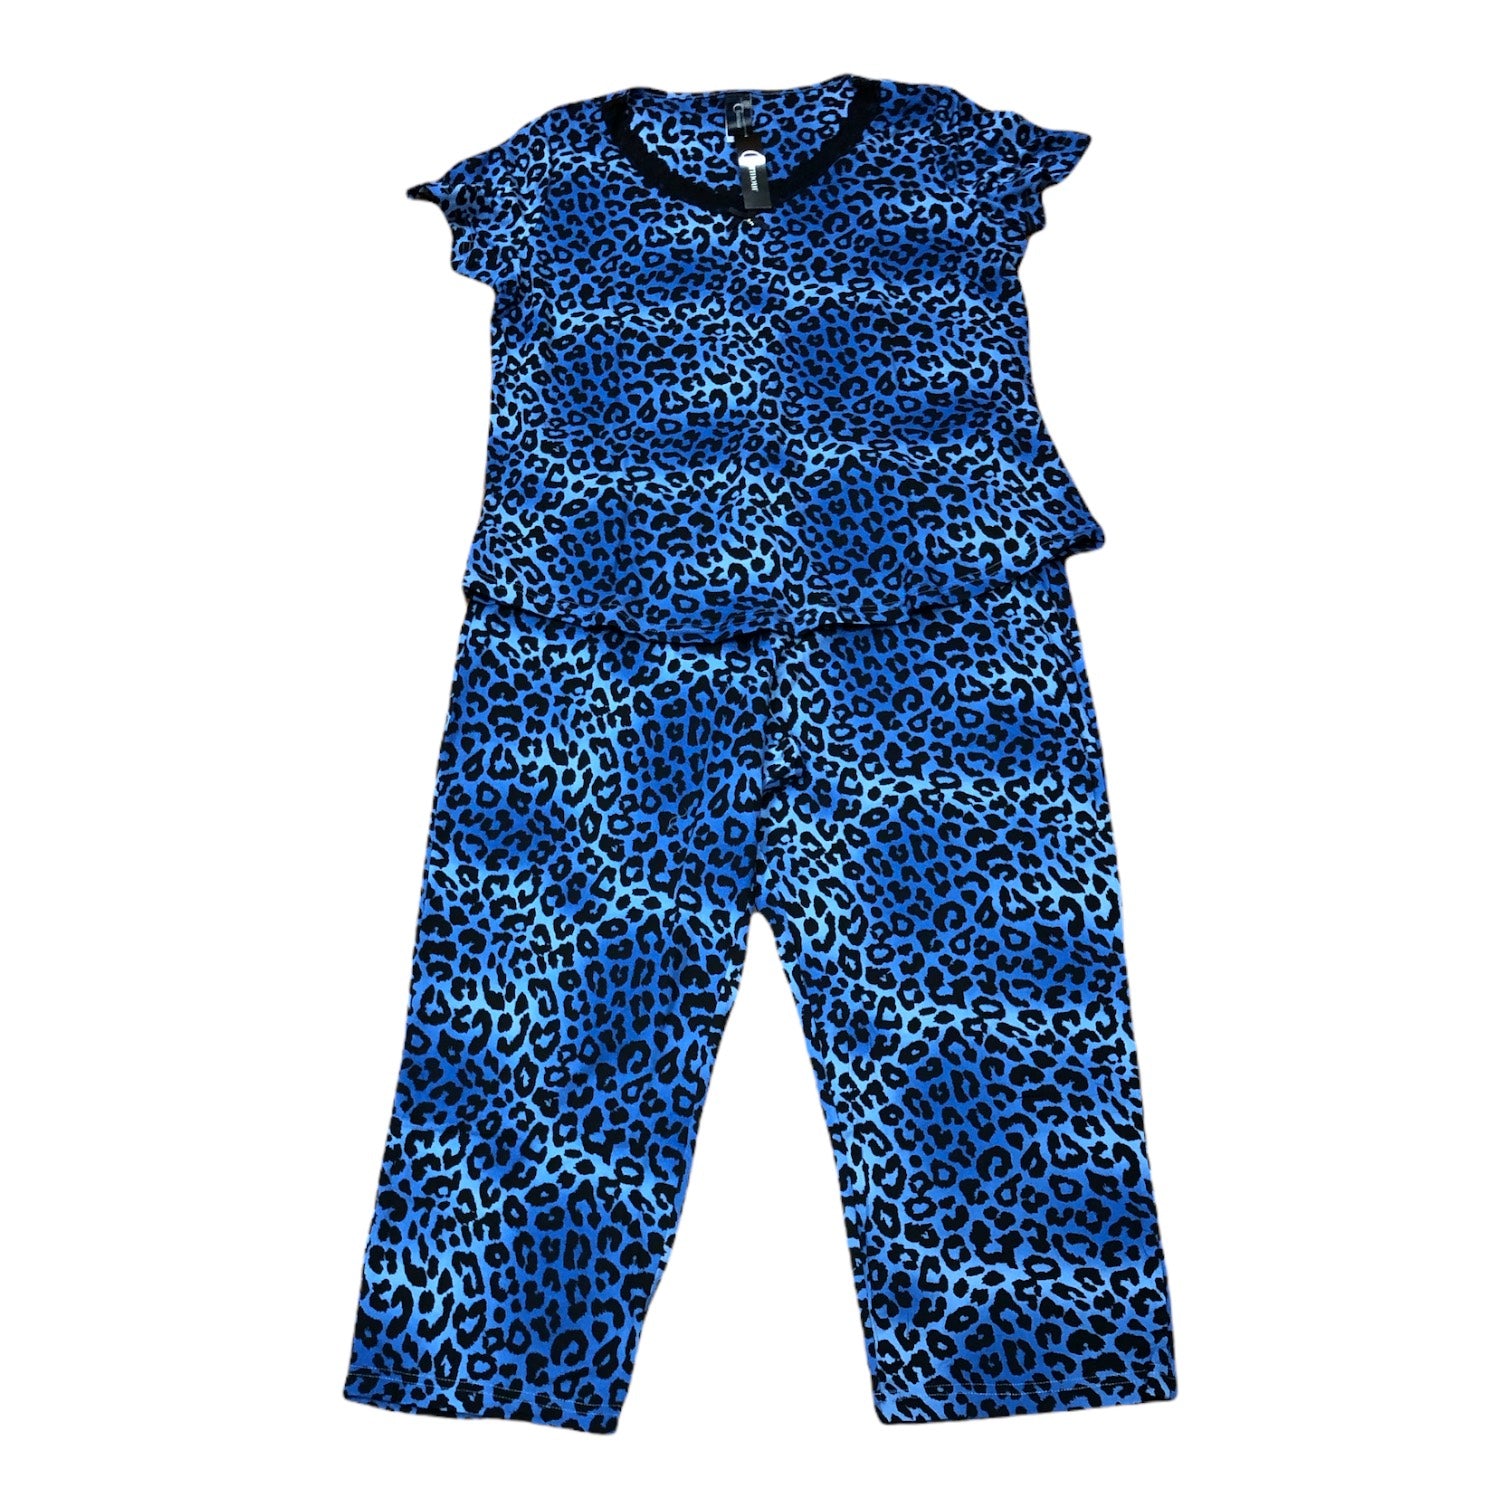 Women's Two Piece Peachy Knit Pajama Set with Capris Pants